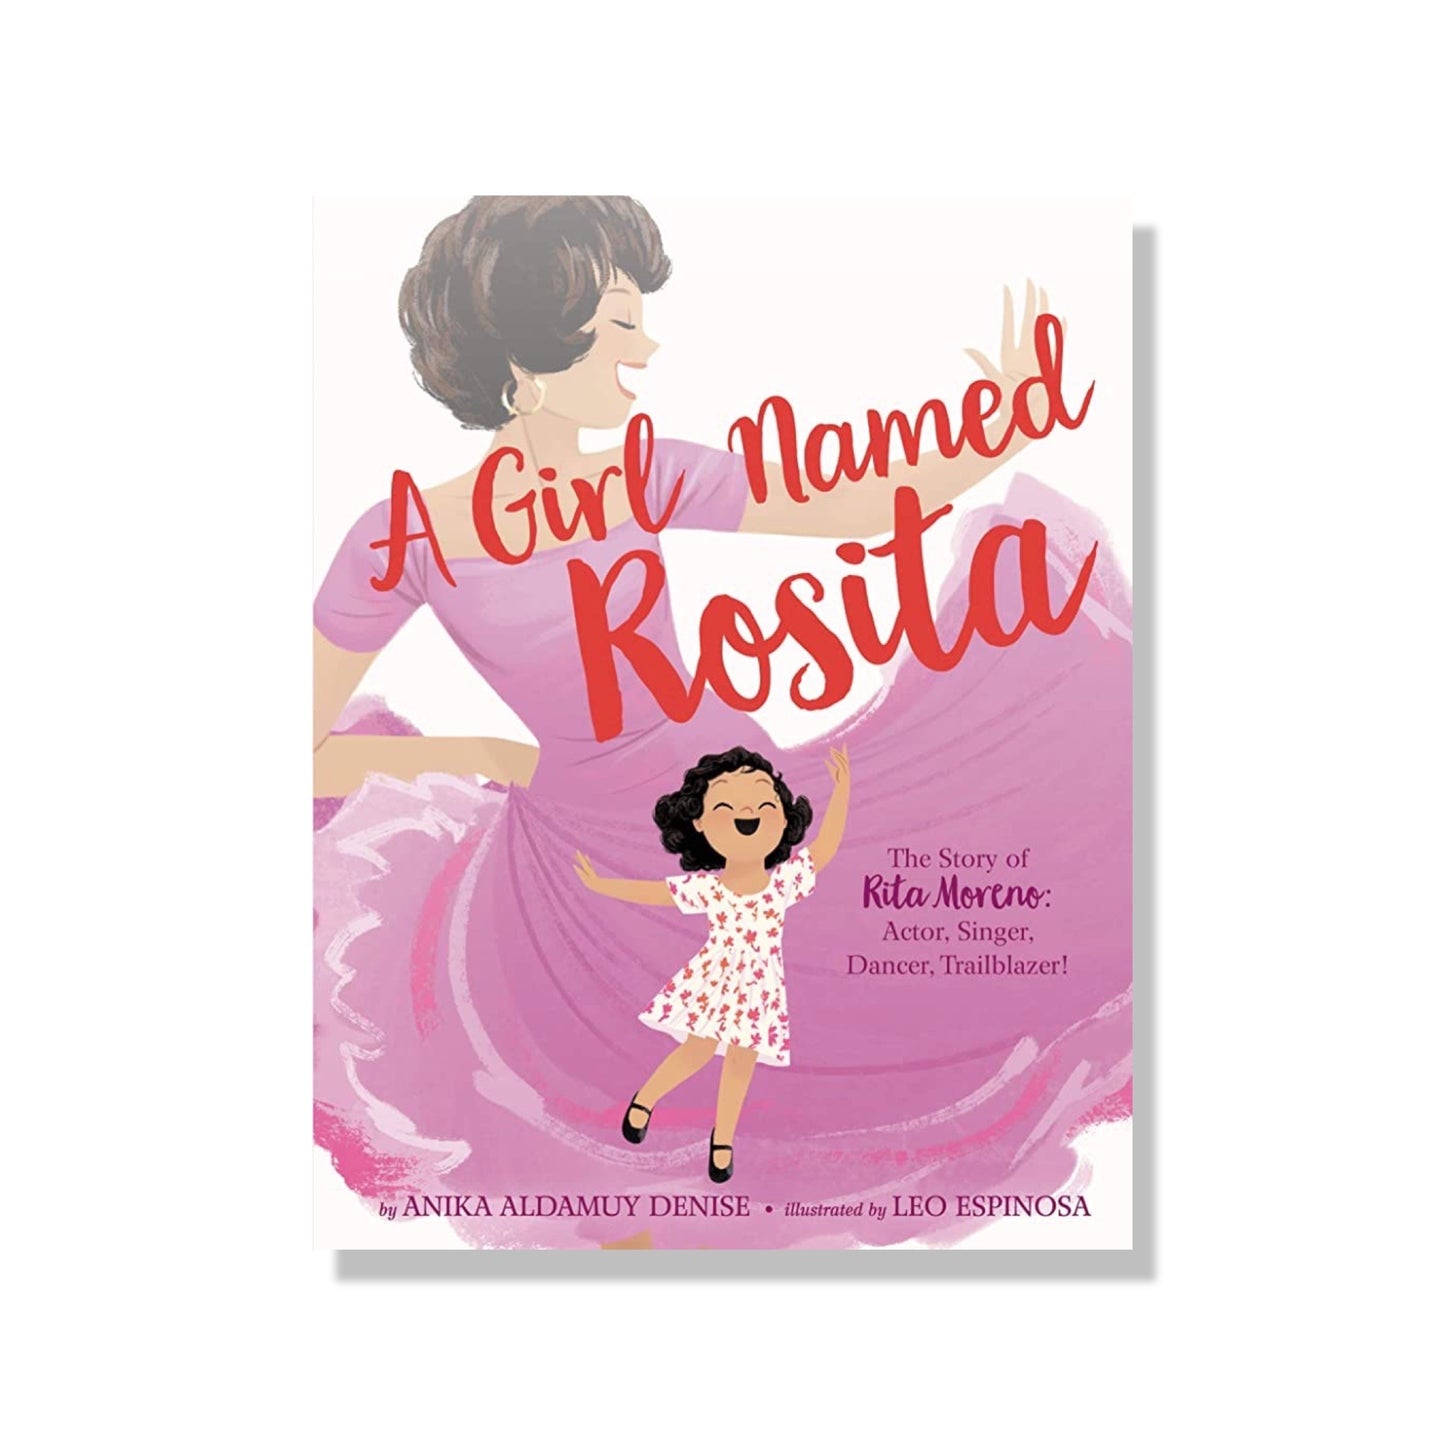 A Girl Named Rosita: The Story of Rita Moreno: Actor, Singer, Dancer, Trailblazer!